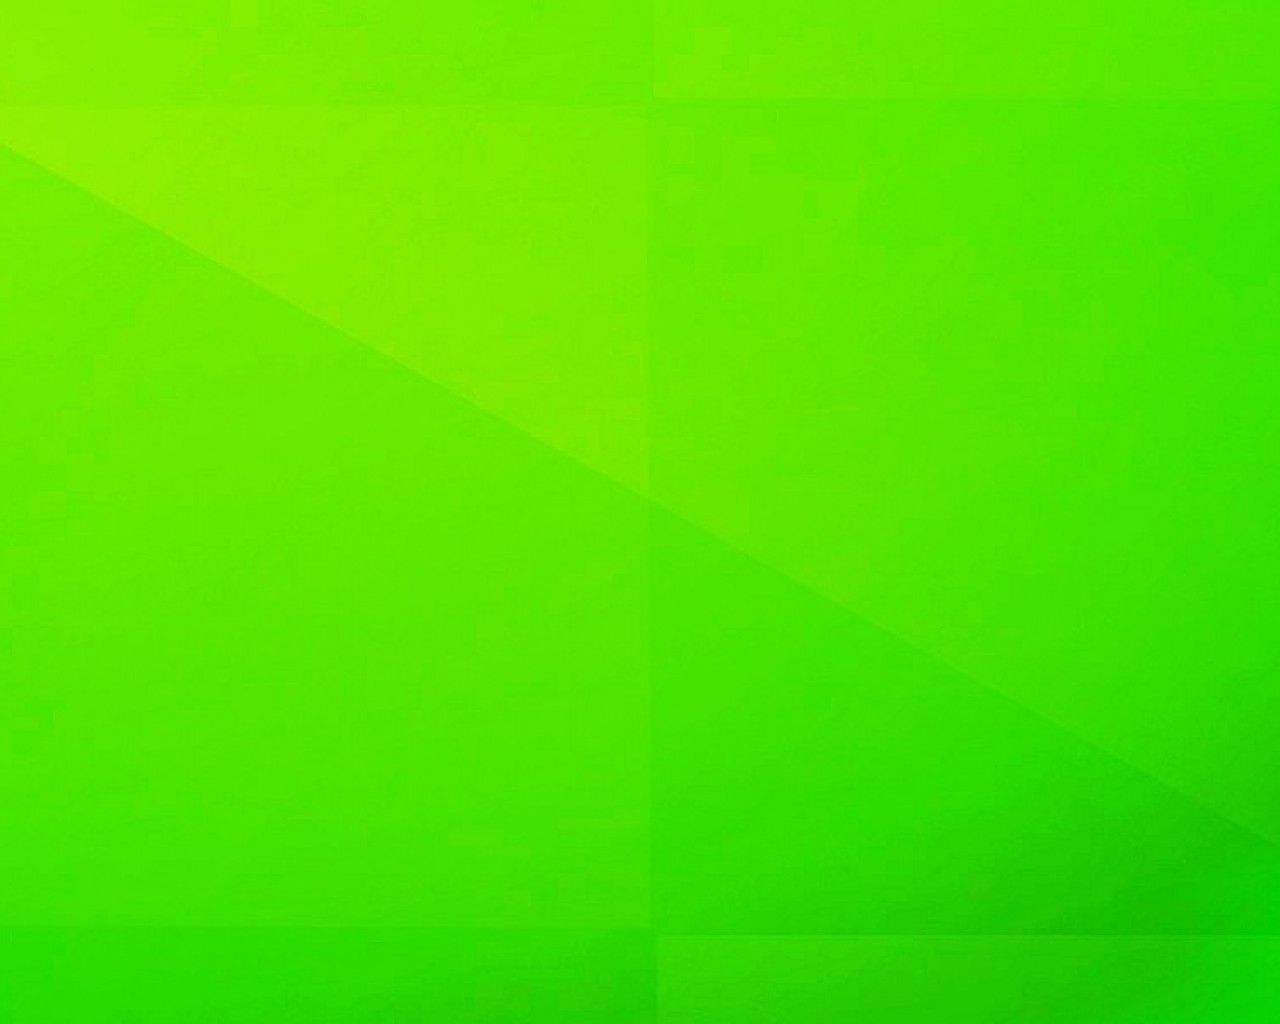 Solid Lime Green HD Wallpaper, imágenes de fondo